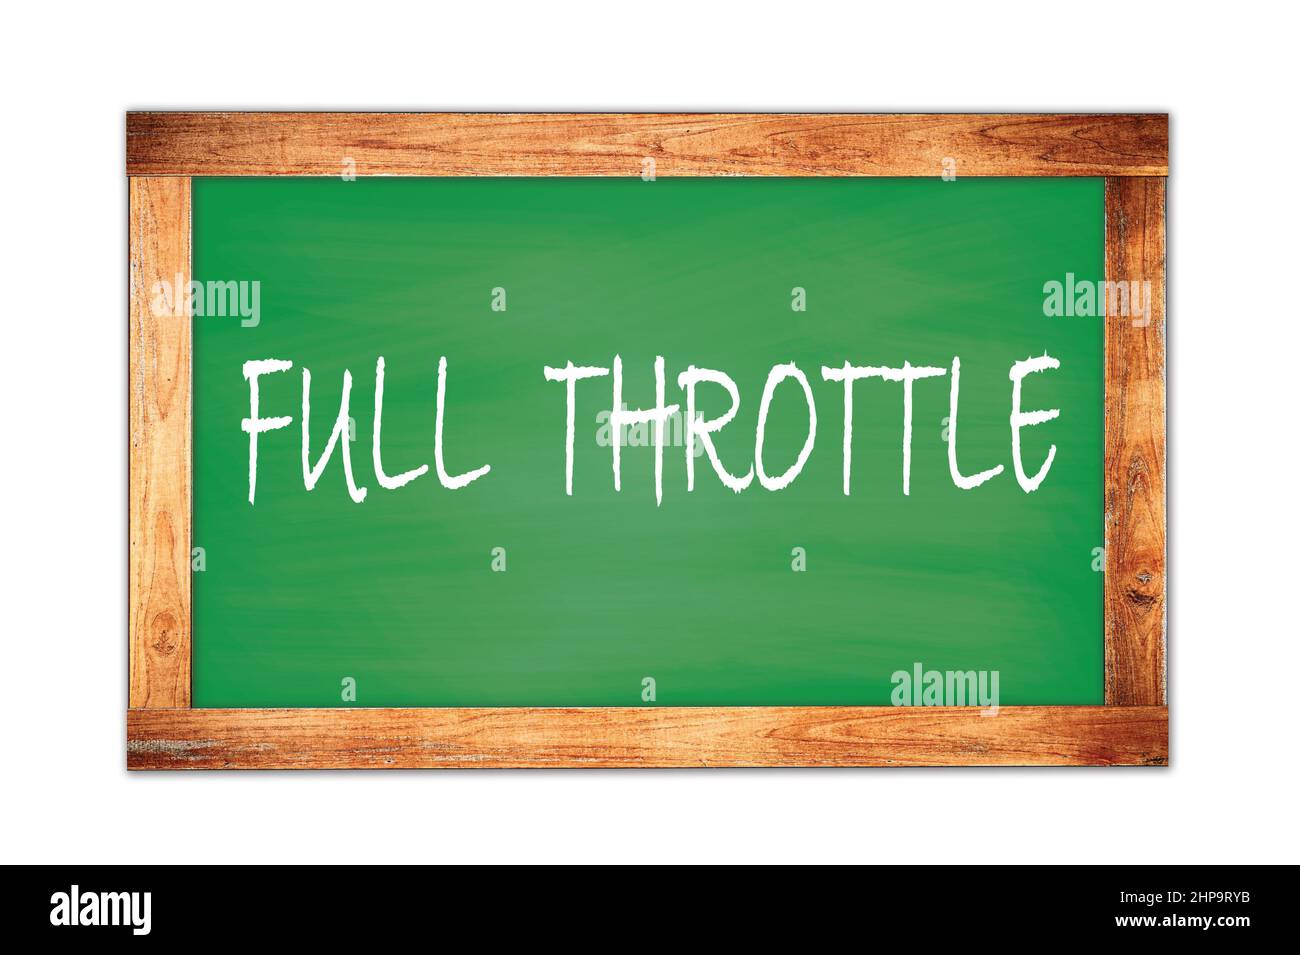 FULL  THROTTLE text written on green wooden frame school blackboard. Stock Photo